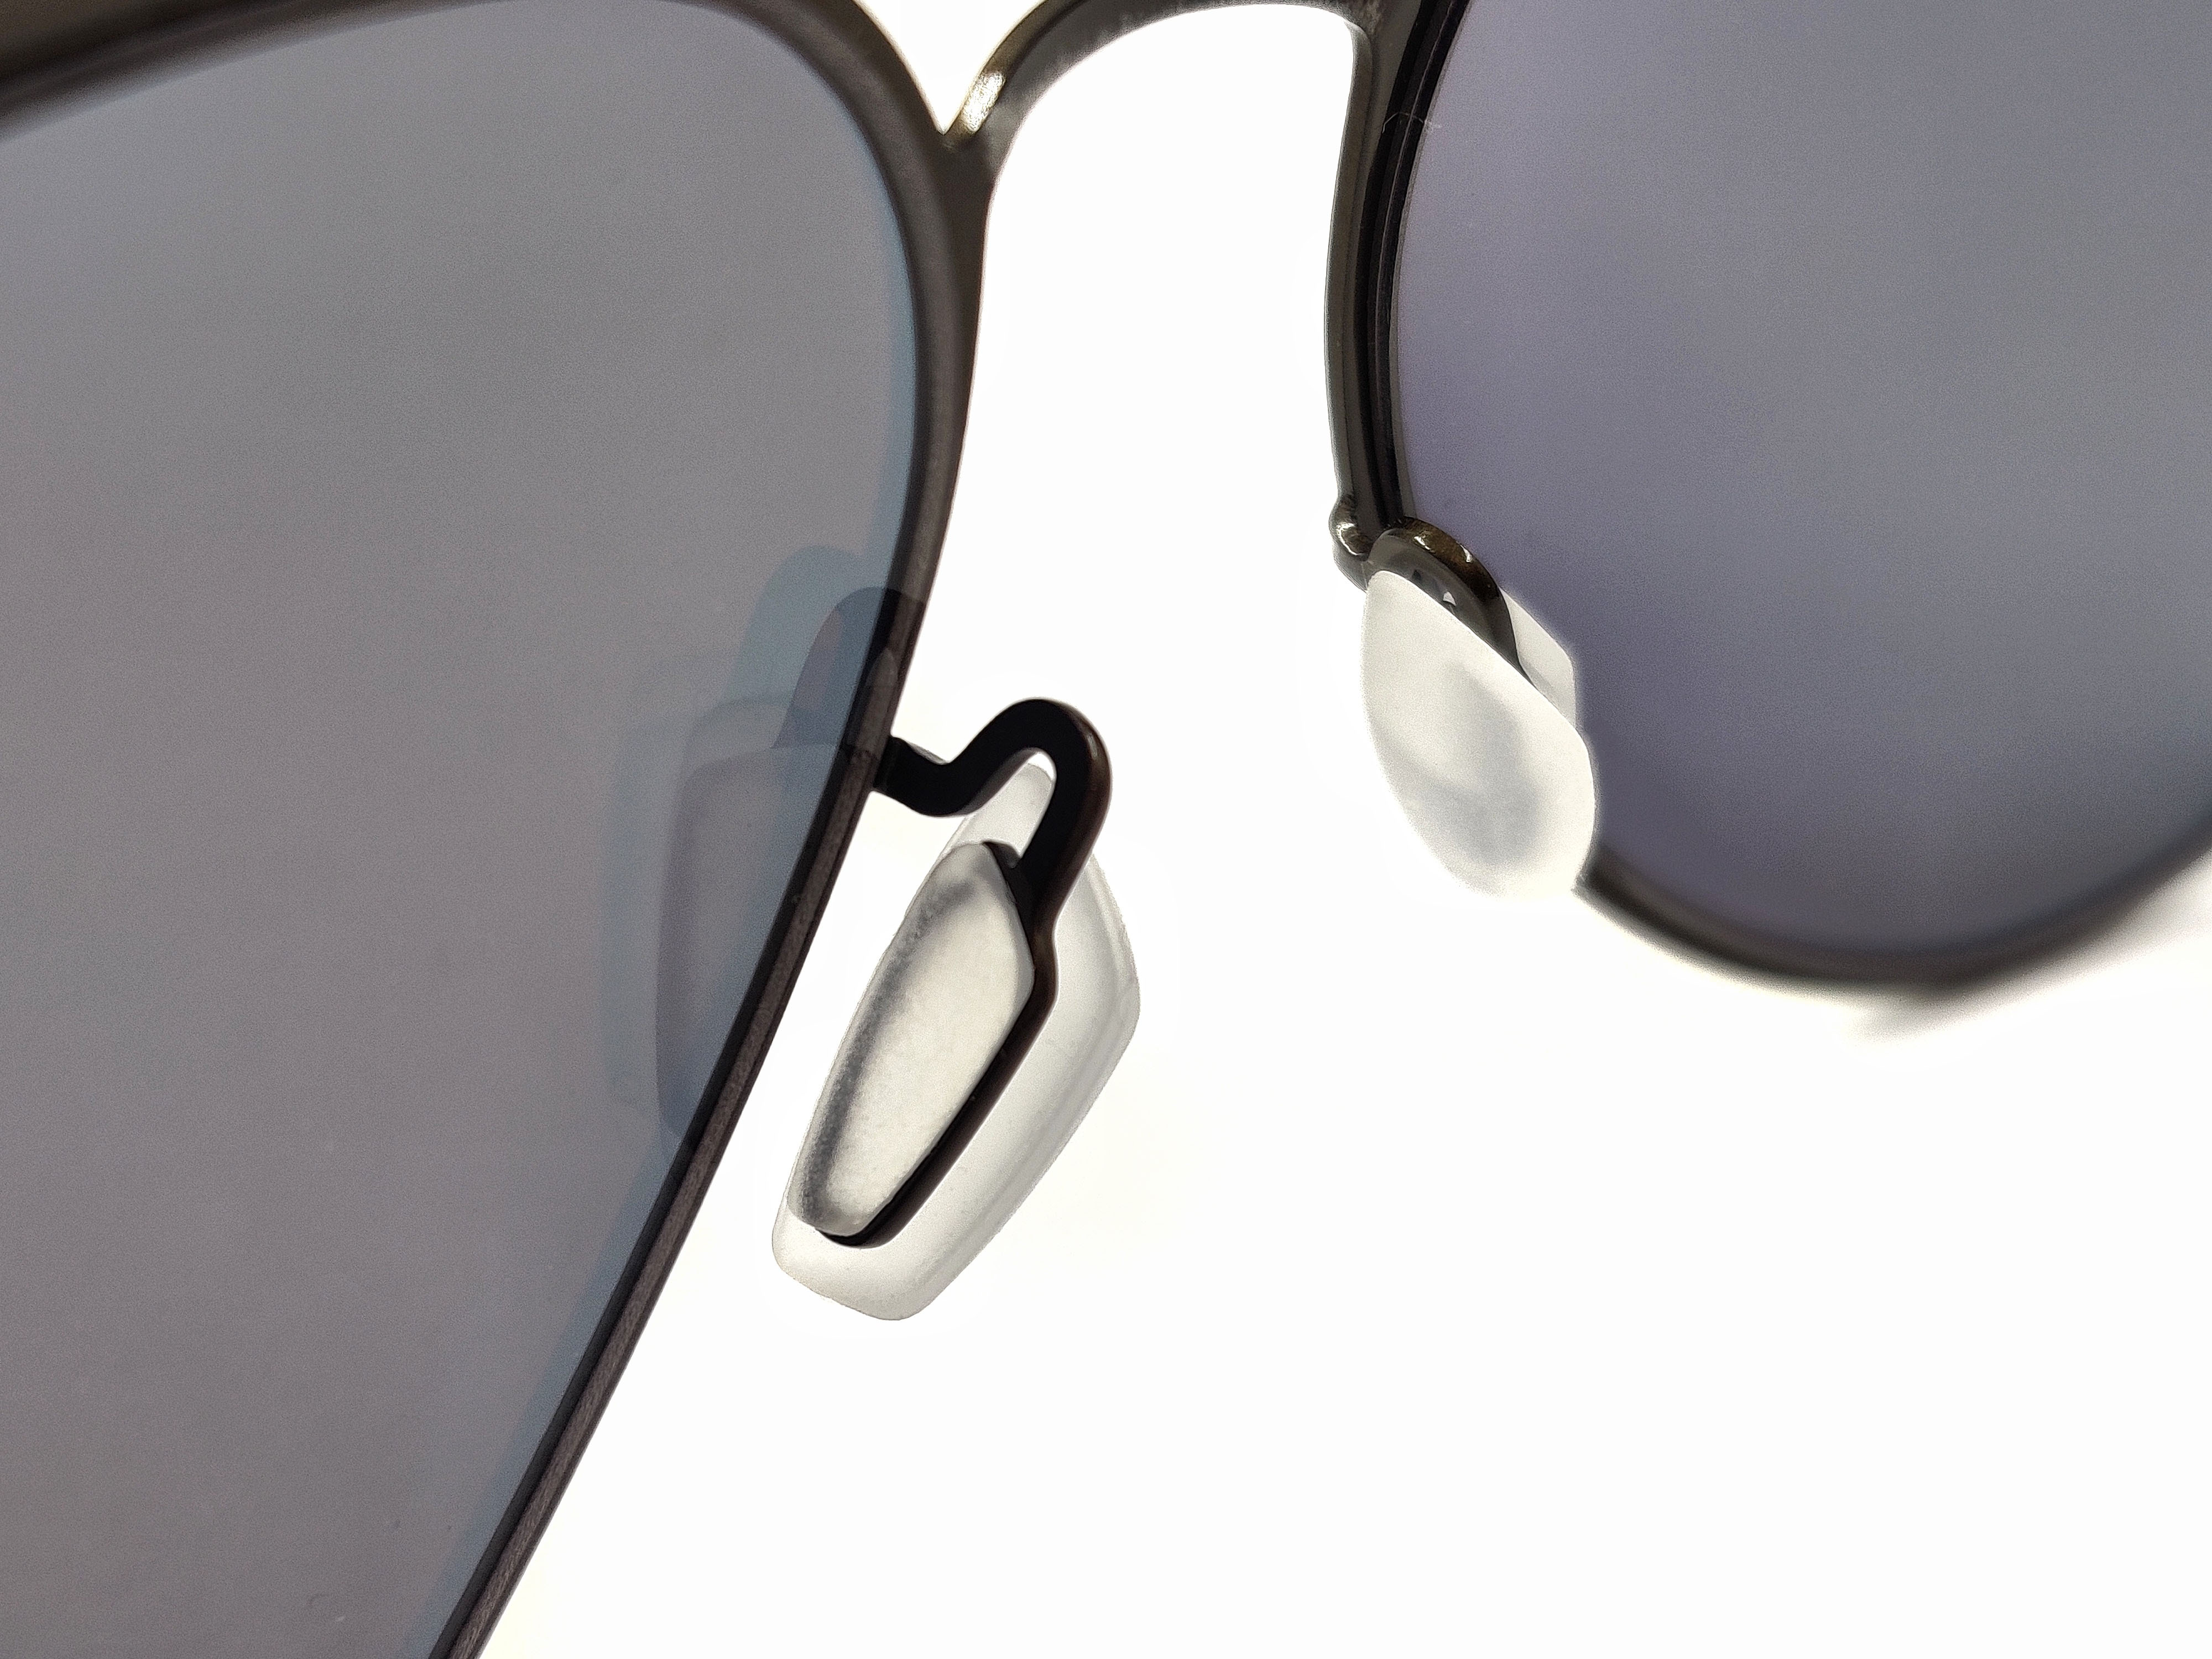 Sun glasses river UV400 high contrast polarized newest custom sunglasses fashion men sunglasses 2022 women shades fishing